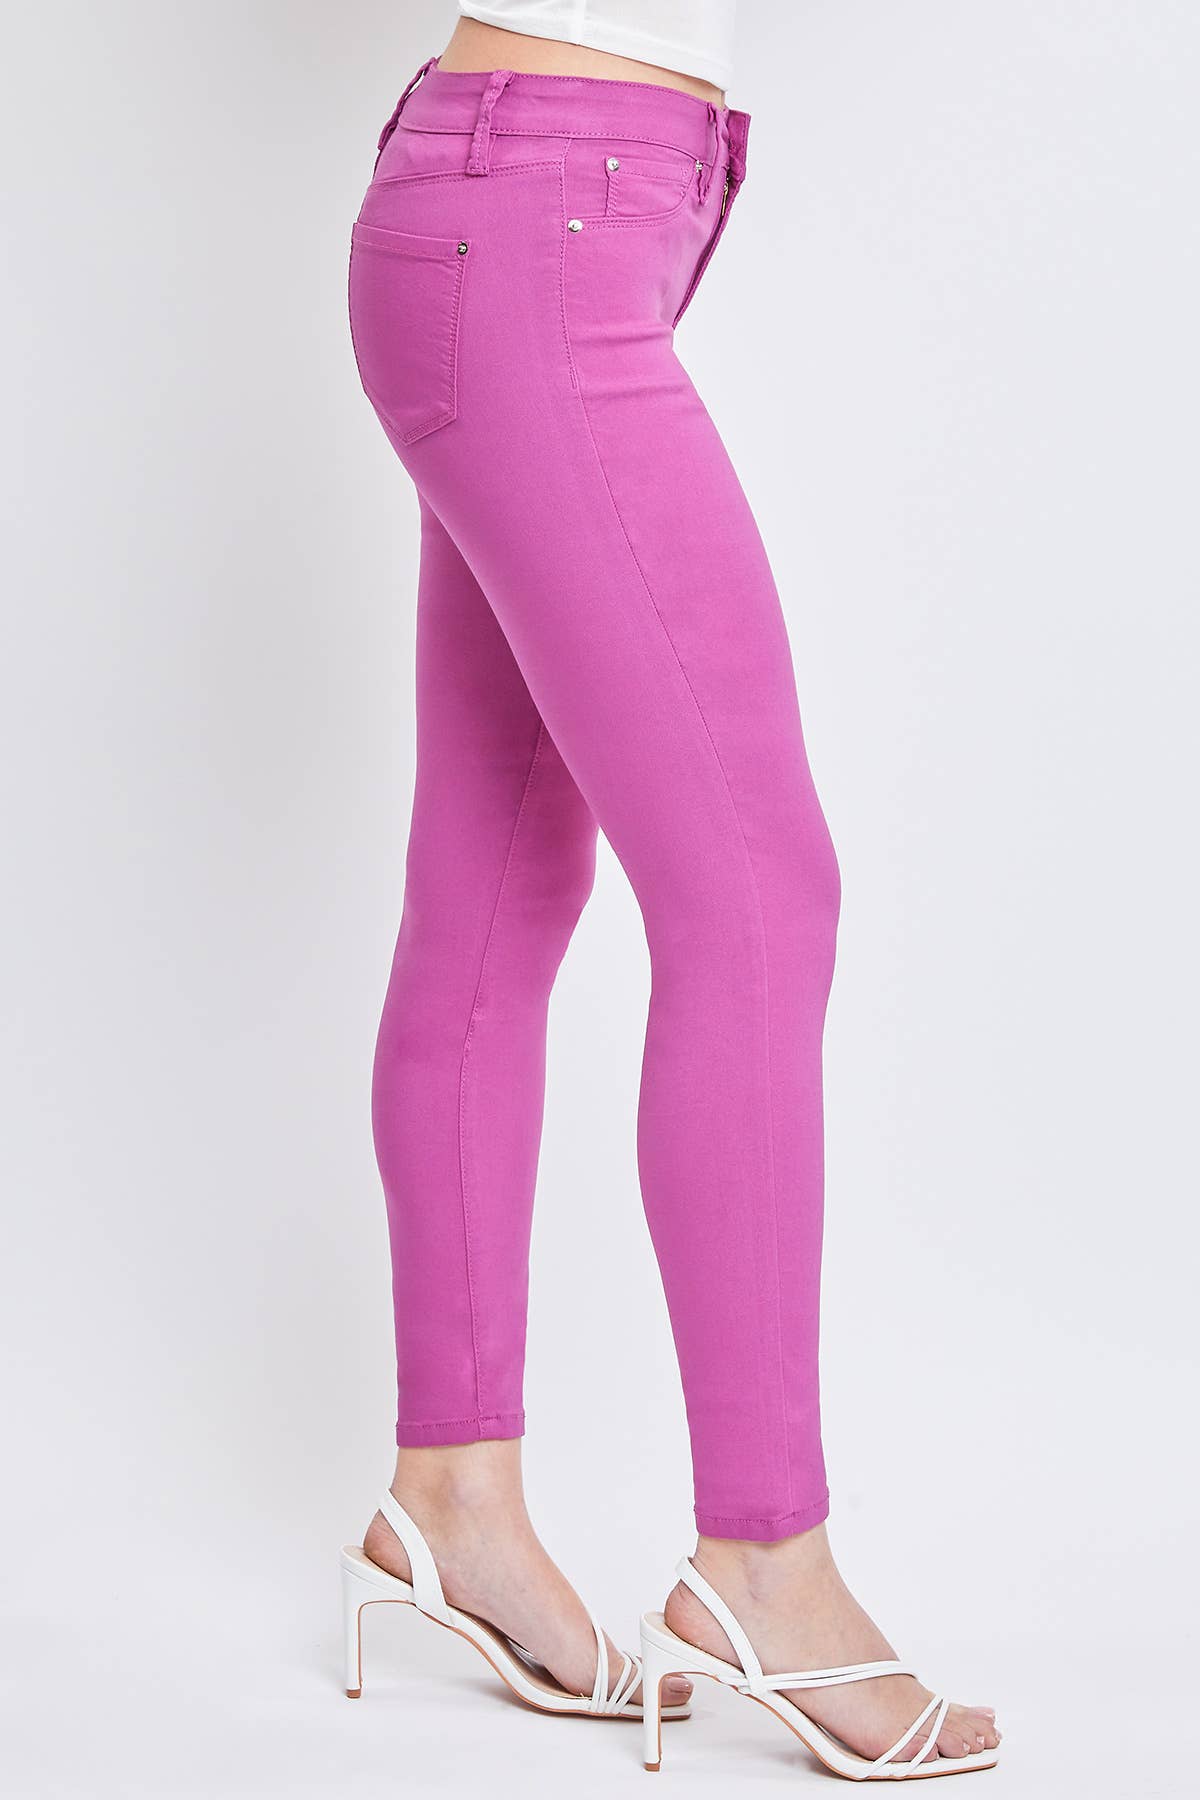 YMI  Hyper stretch Mid-Rise Skinny Jean in Brose Color